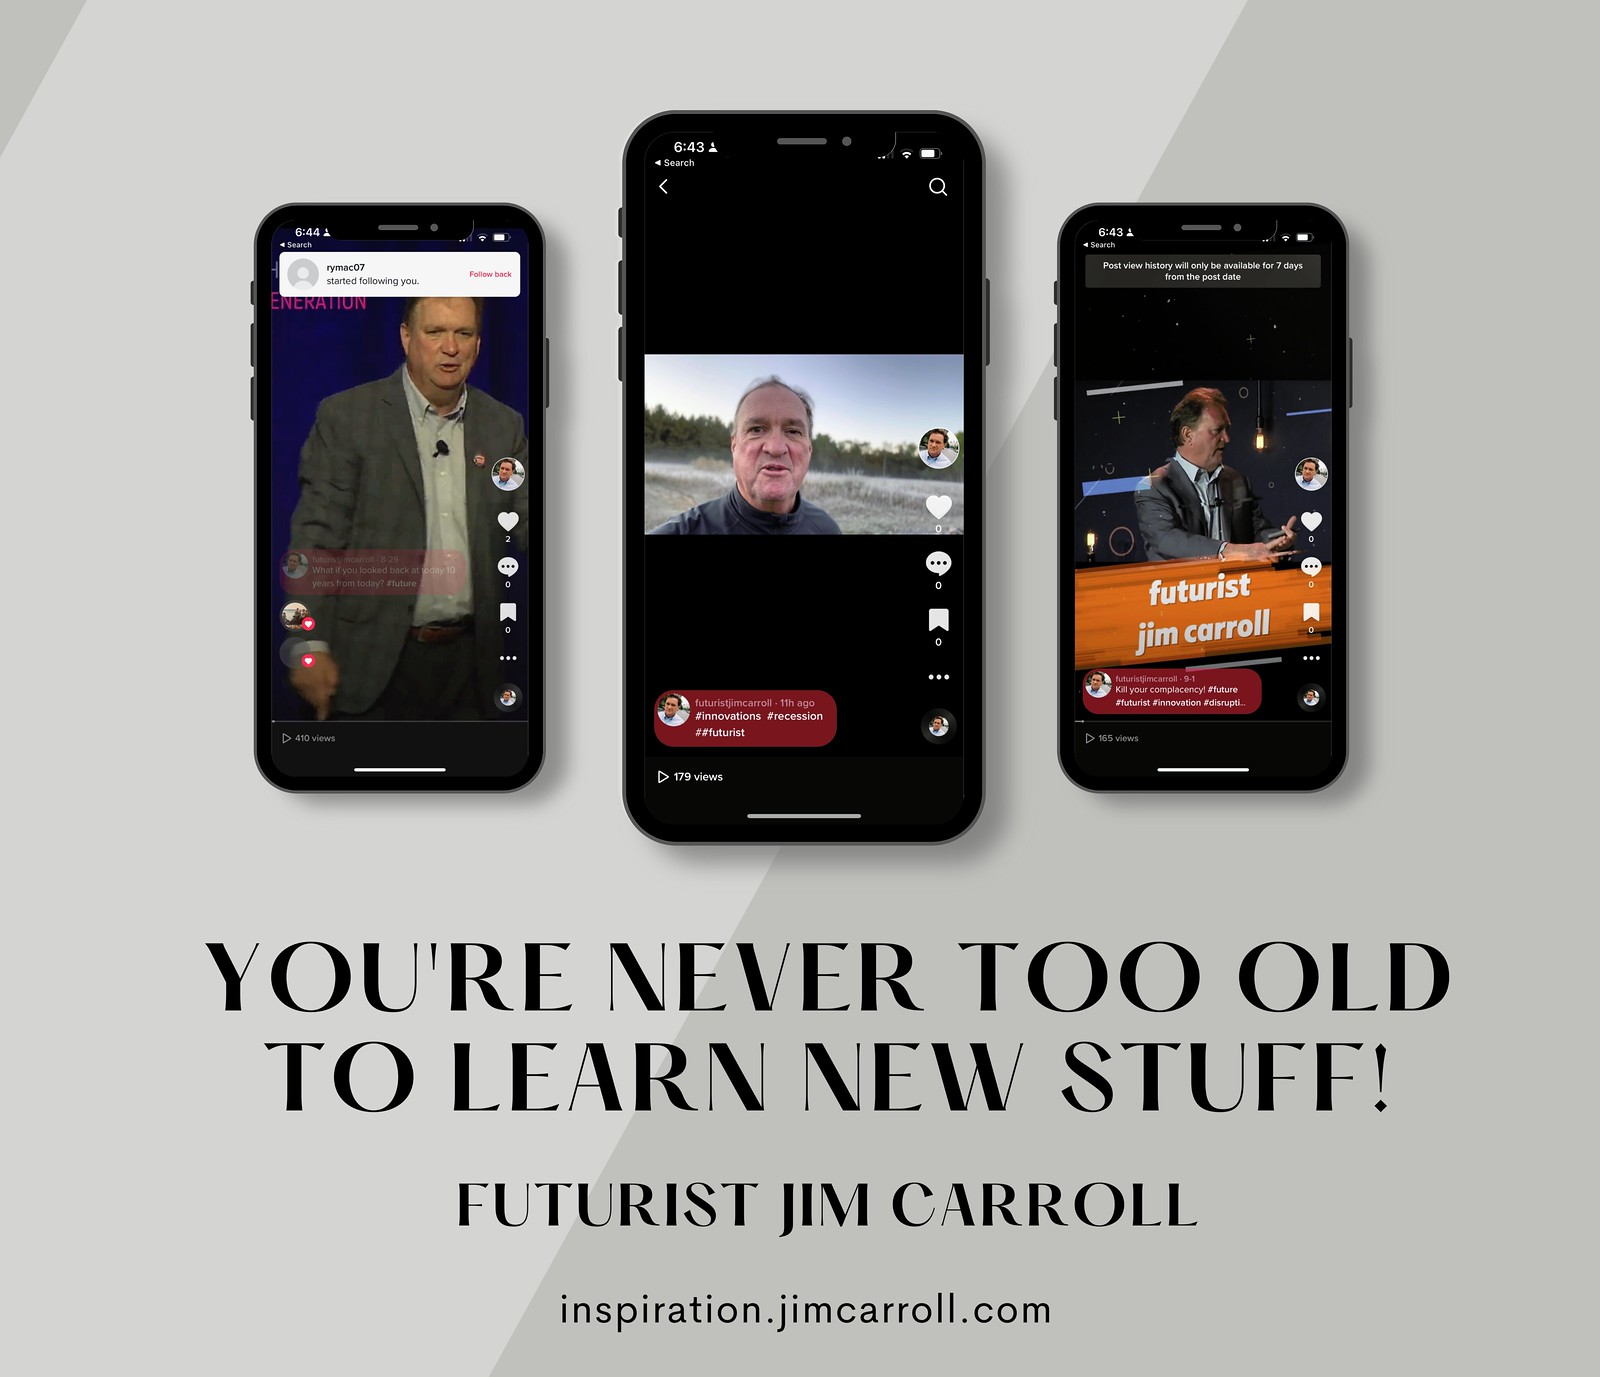 N"You're never too old to learn new stuff!" - Futurist Jim CarrollewStuff